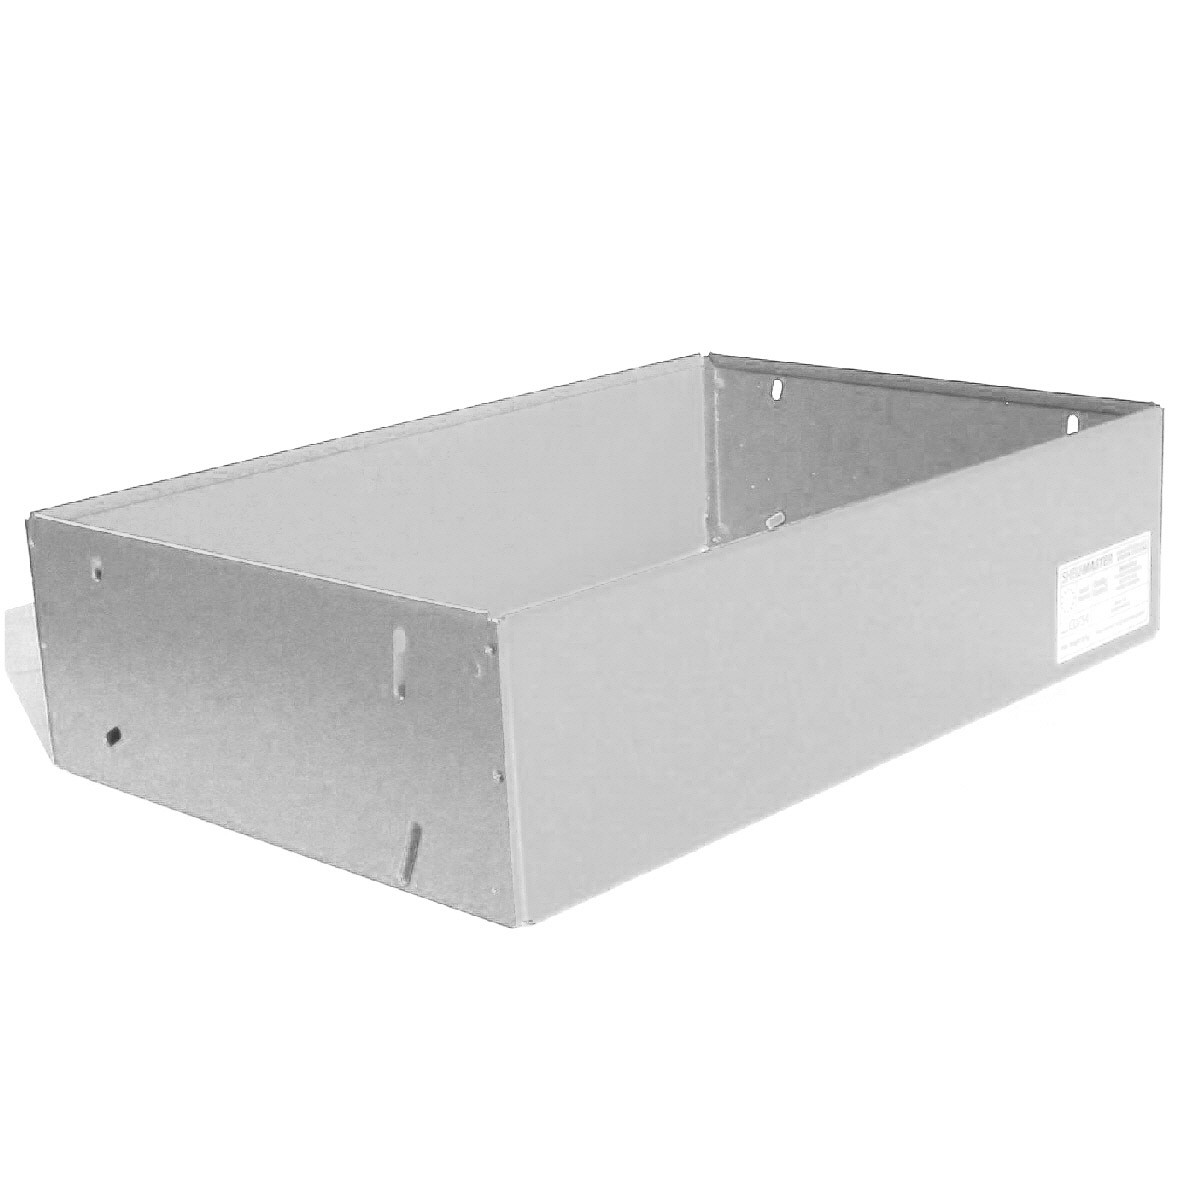 ShelfMaster Box Shelf 125mm x 320mm x 480mm | SMBS320/125